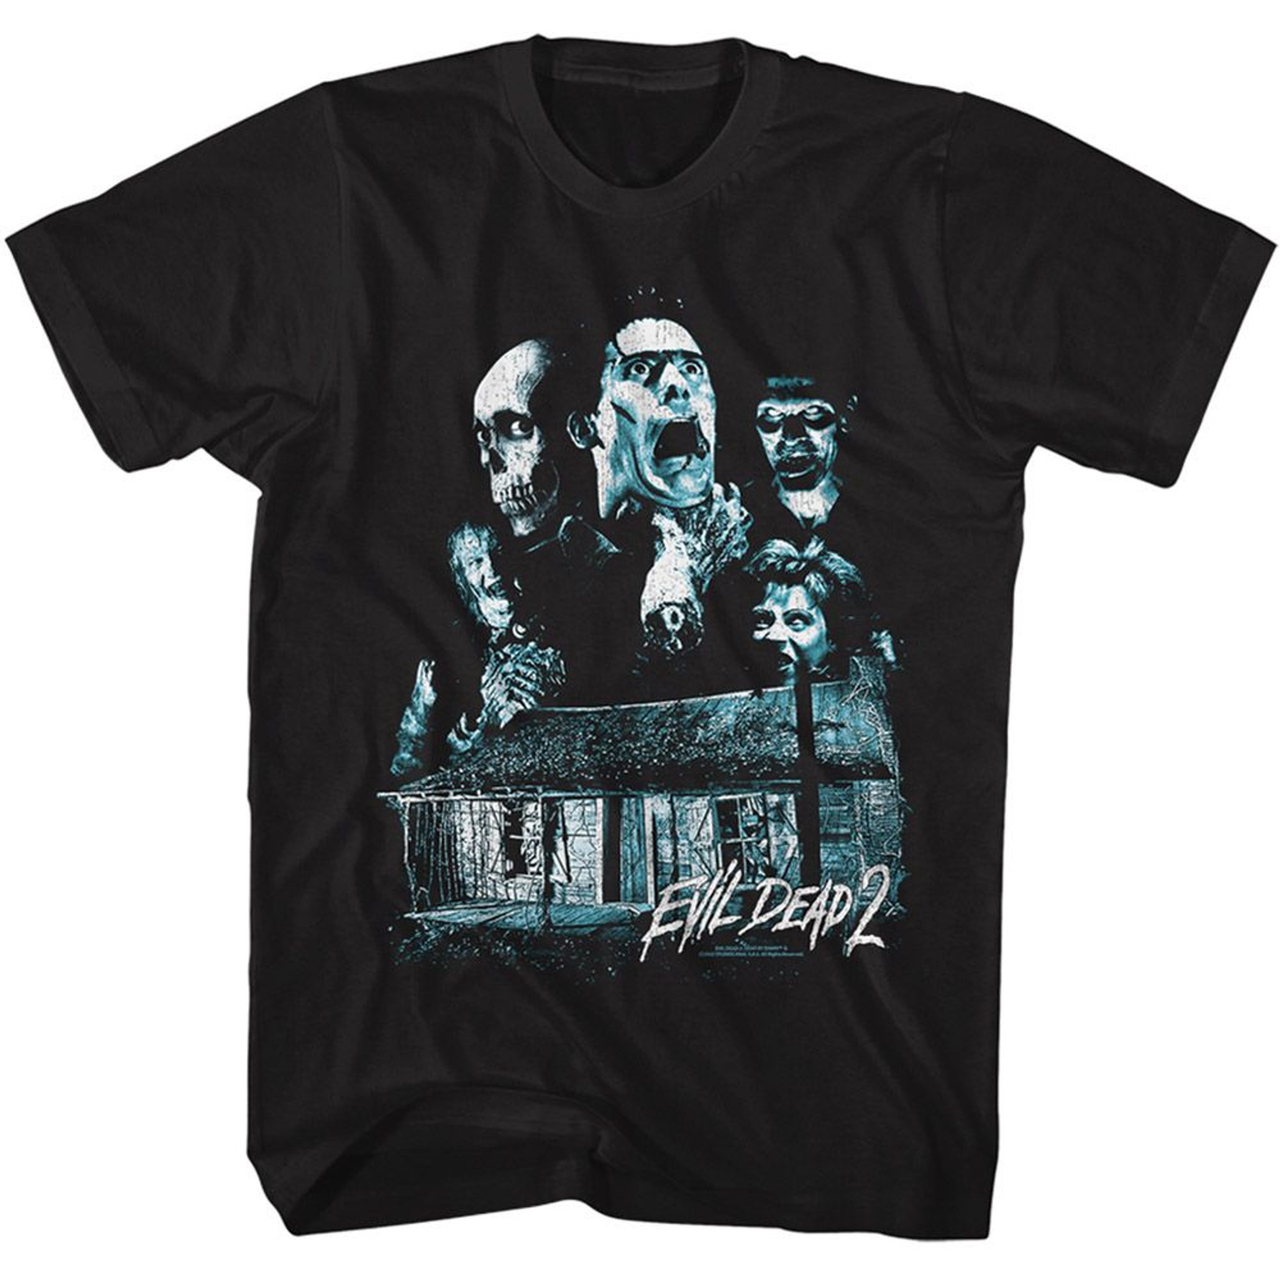 The Evil Dead 2 Collage T-Shirt